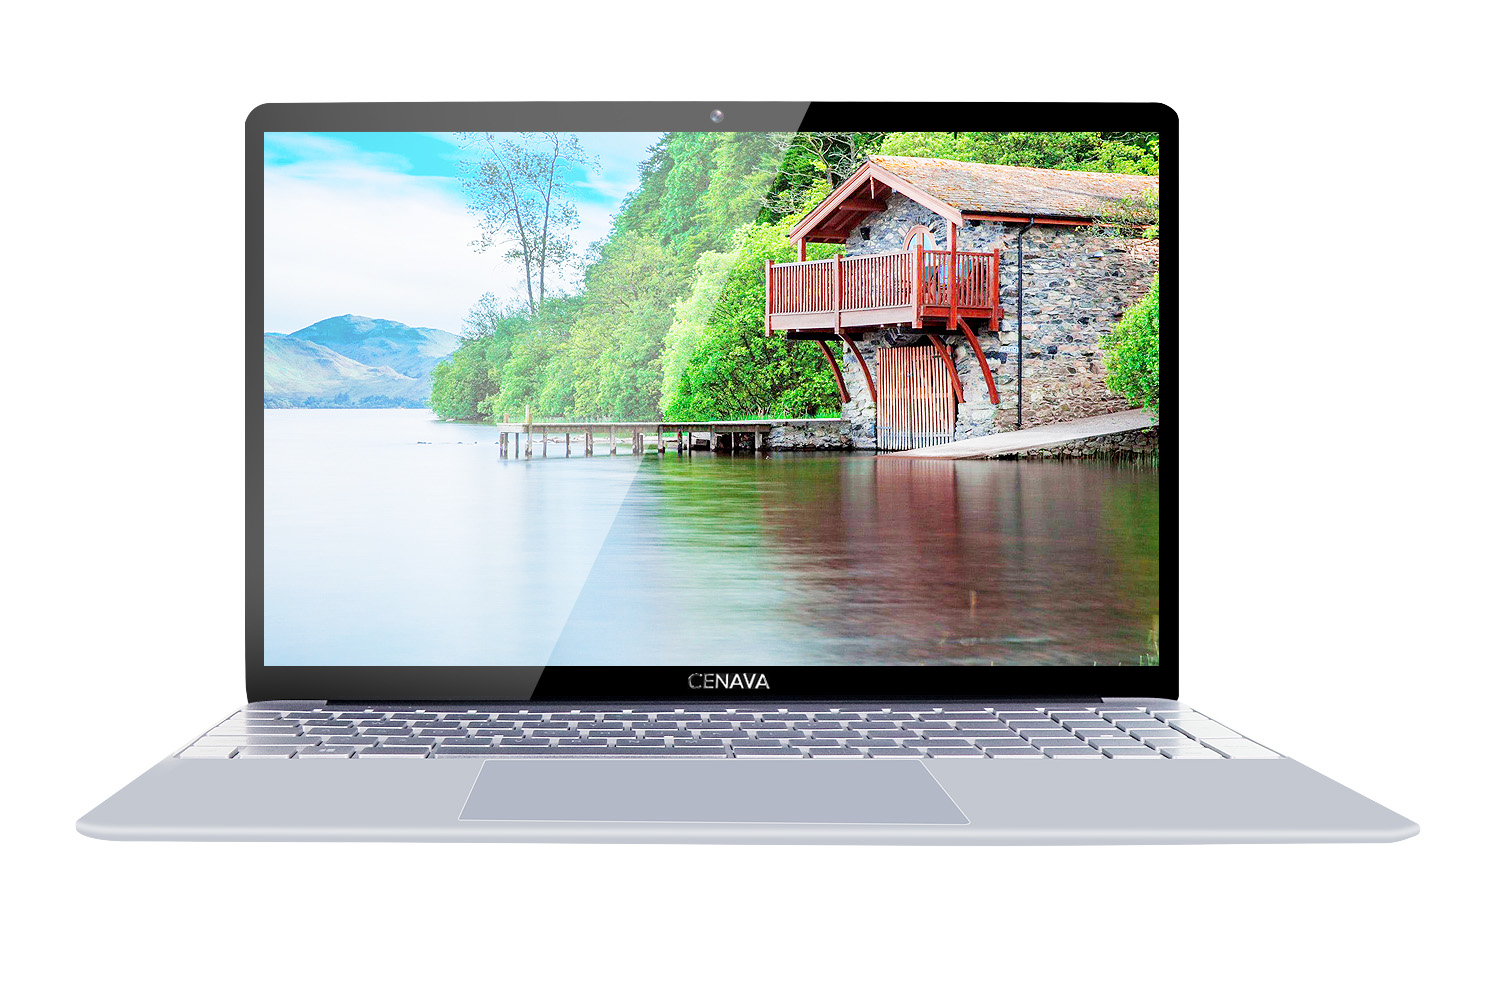 

CENAVA F151 Ноутбук 15,6-дюймовый Intel Core J3455 Intel HD Графика 500 Win10 8G RAM 256GB SSD ноутбук TN Экран